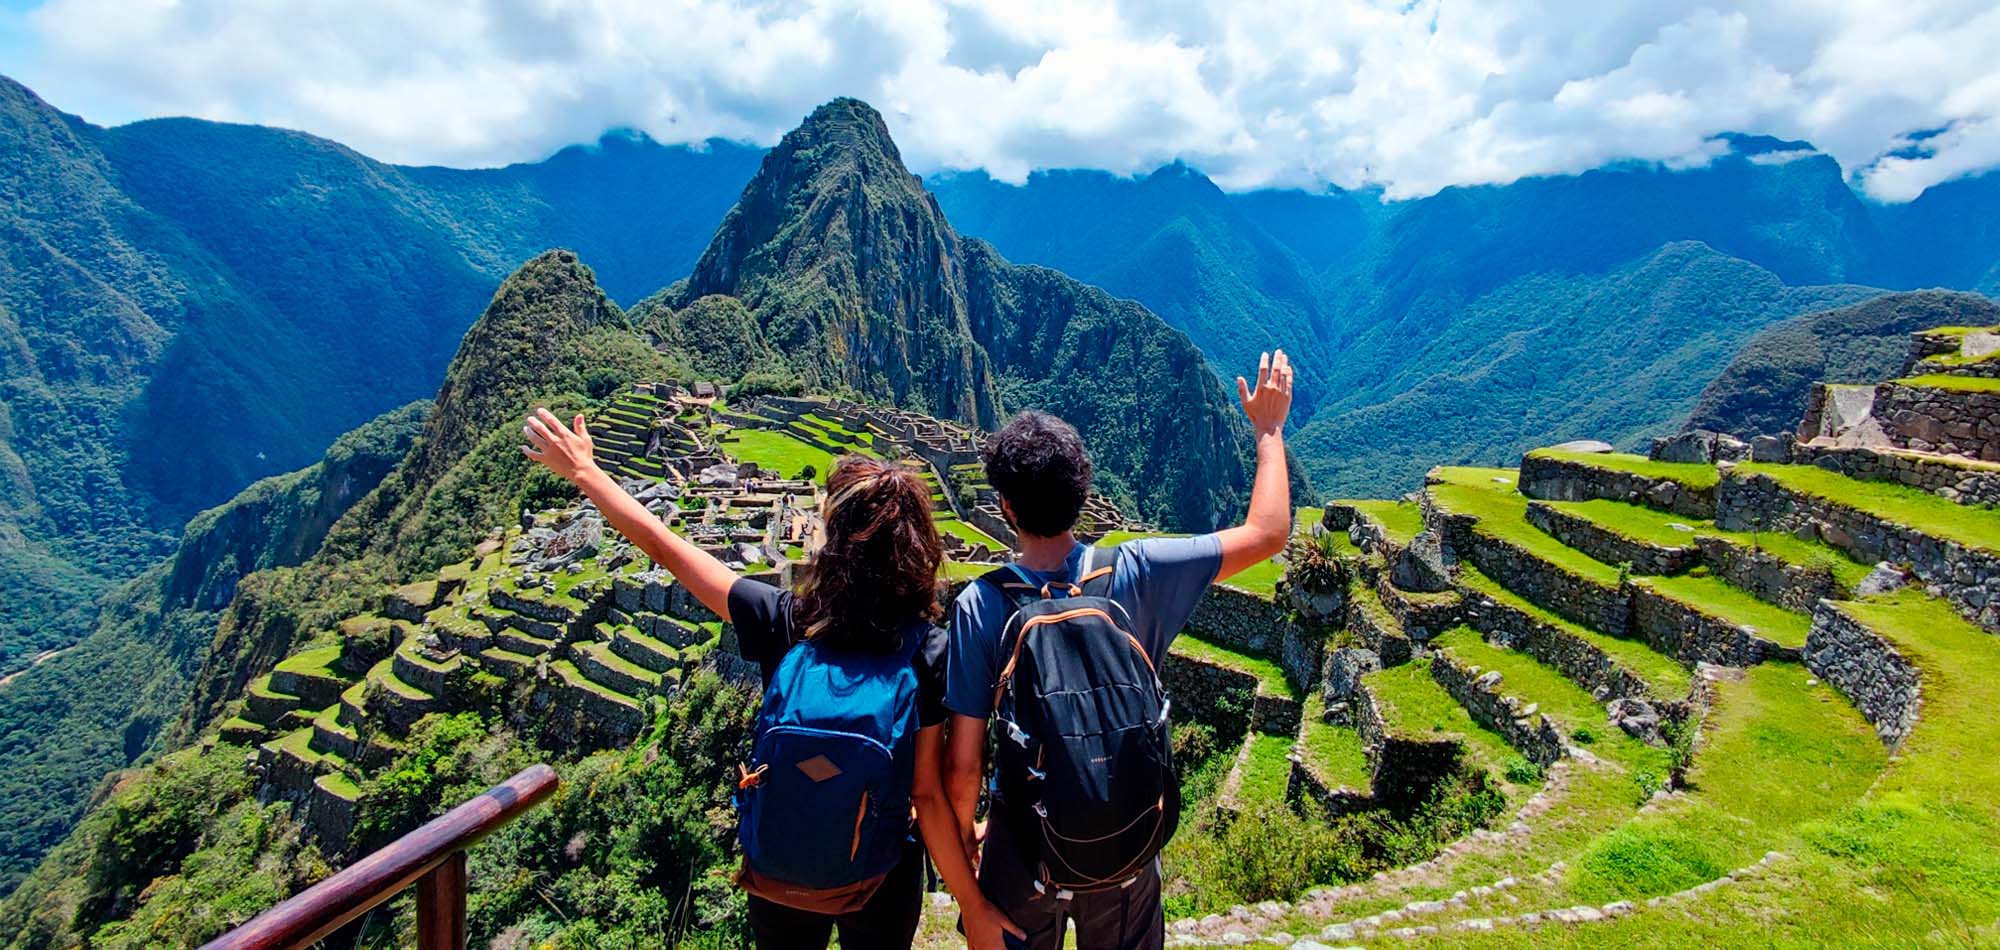 Inca Trail to Machu Picchu 1 day - Incatrailhikeperu

参观马丘比丘之前需要了解的重要事项